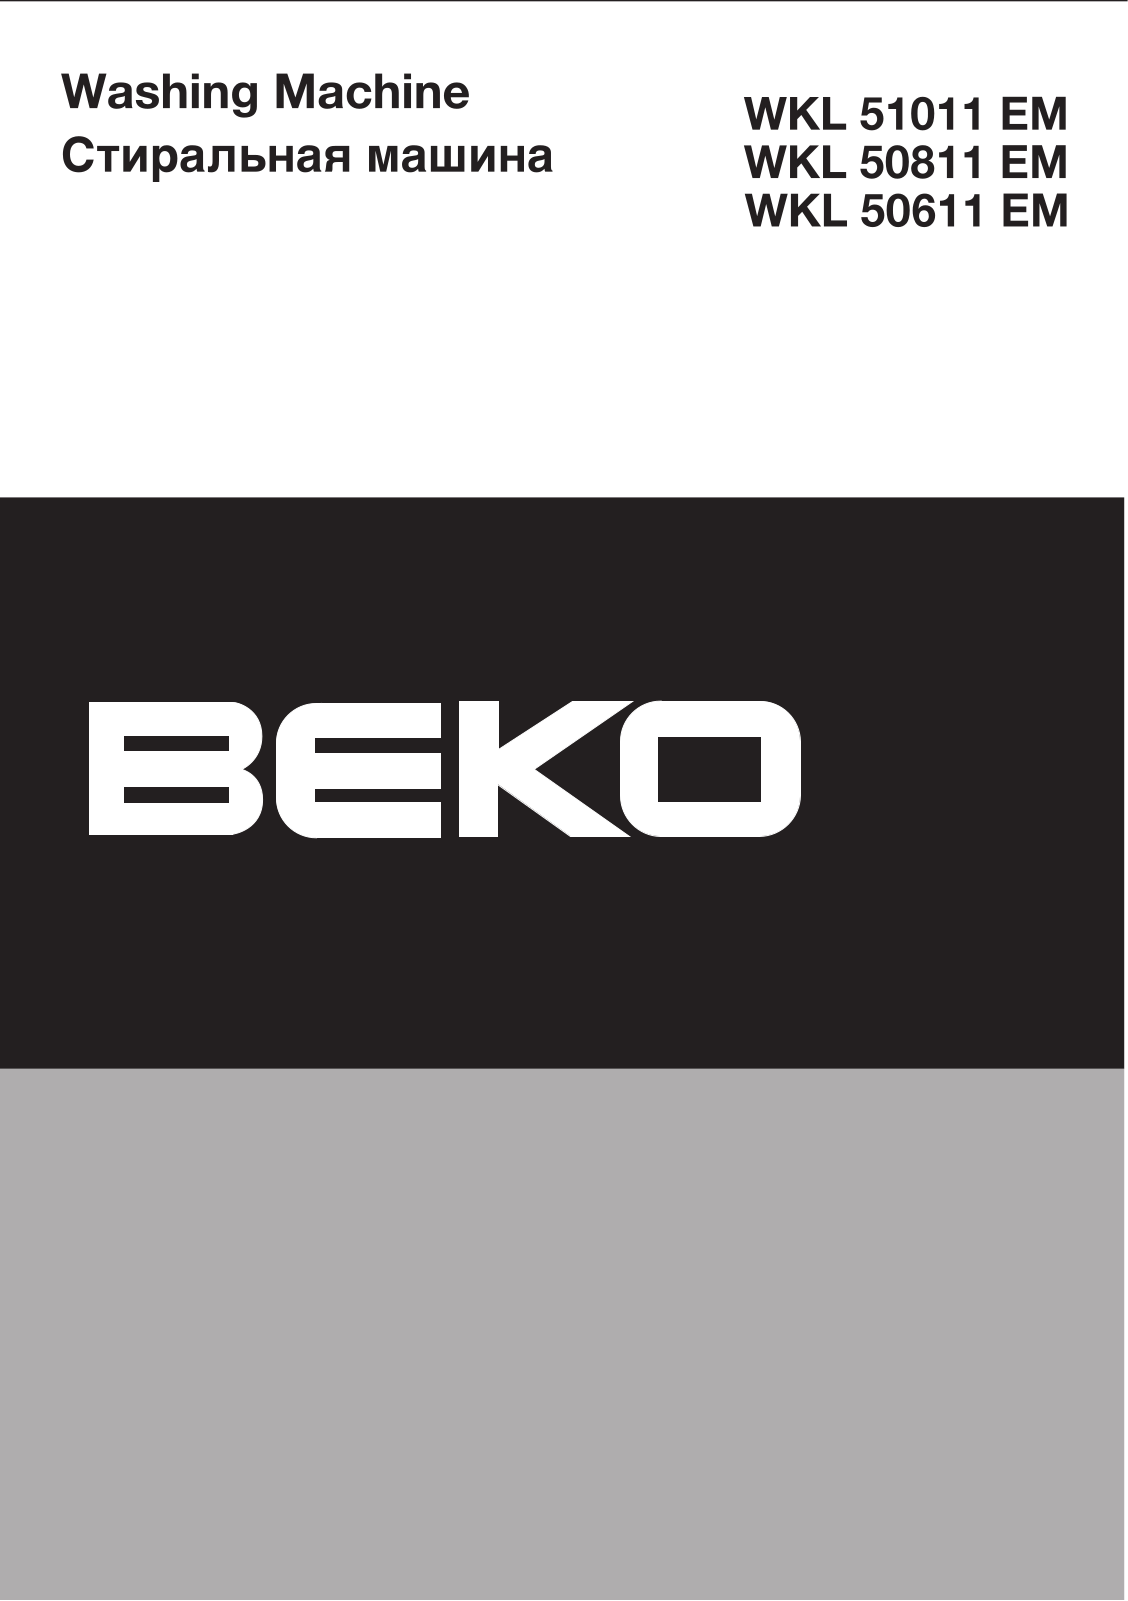 Beko WKL 50811 EM, WKL 50611 EM, WKL 51011 EM User Manual